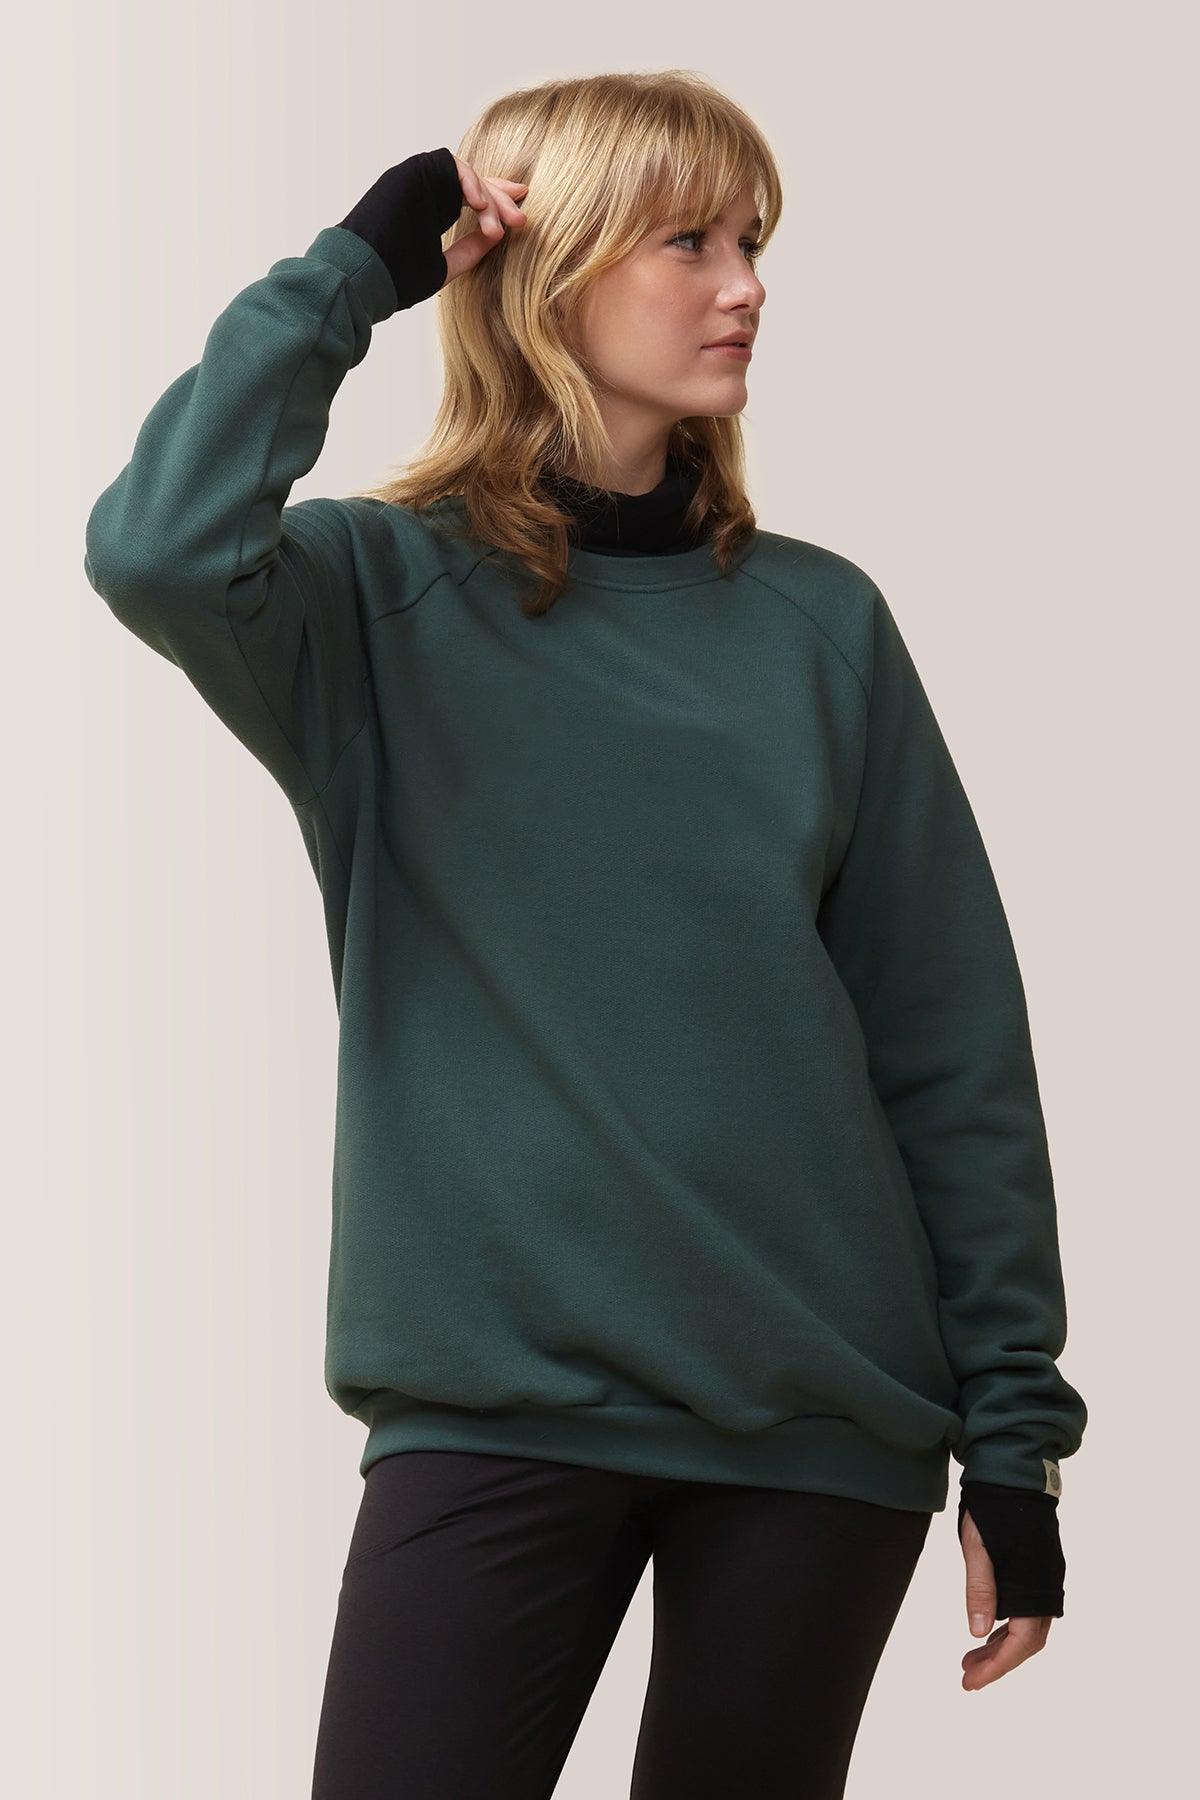 Femme qui porte le chandail Esential Boyfriend de Rose Boreal./ Women wearing the Essential Boyfriend Sweatshirt by Rose Boreal. -Cypress